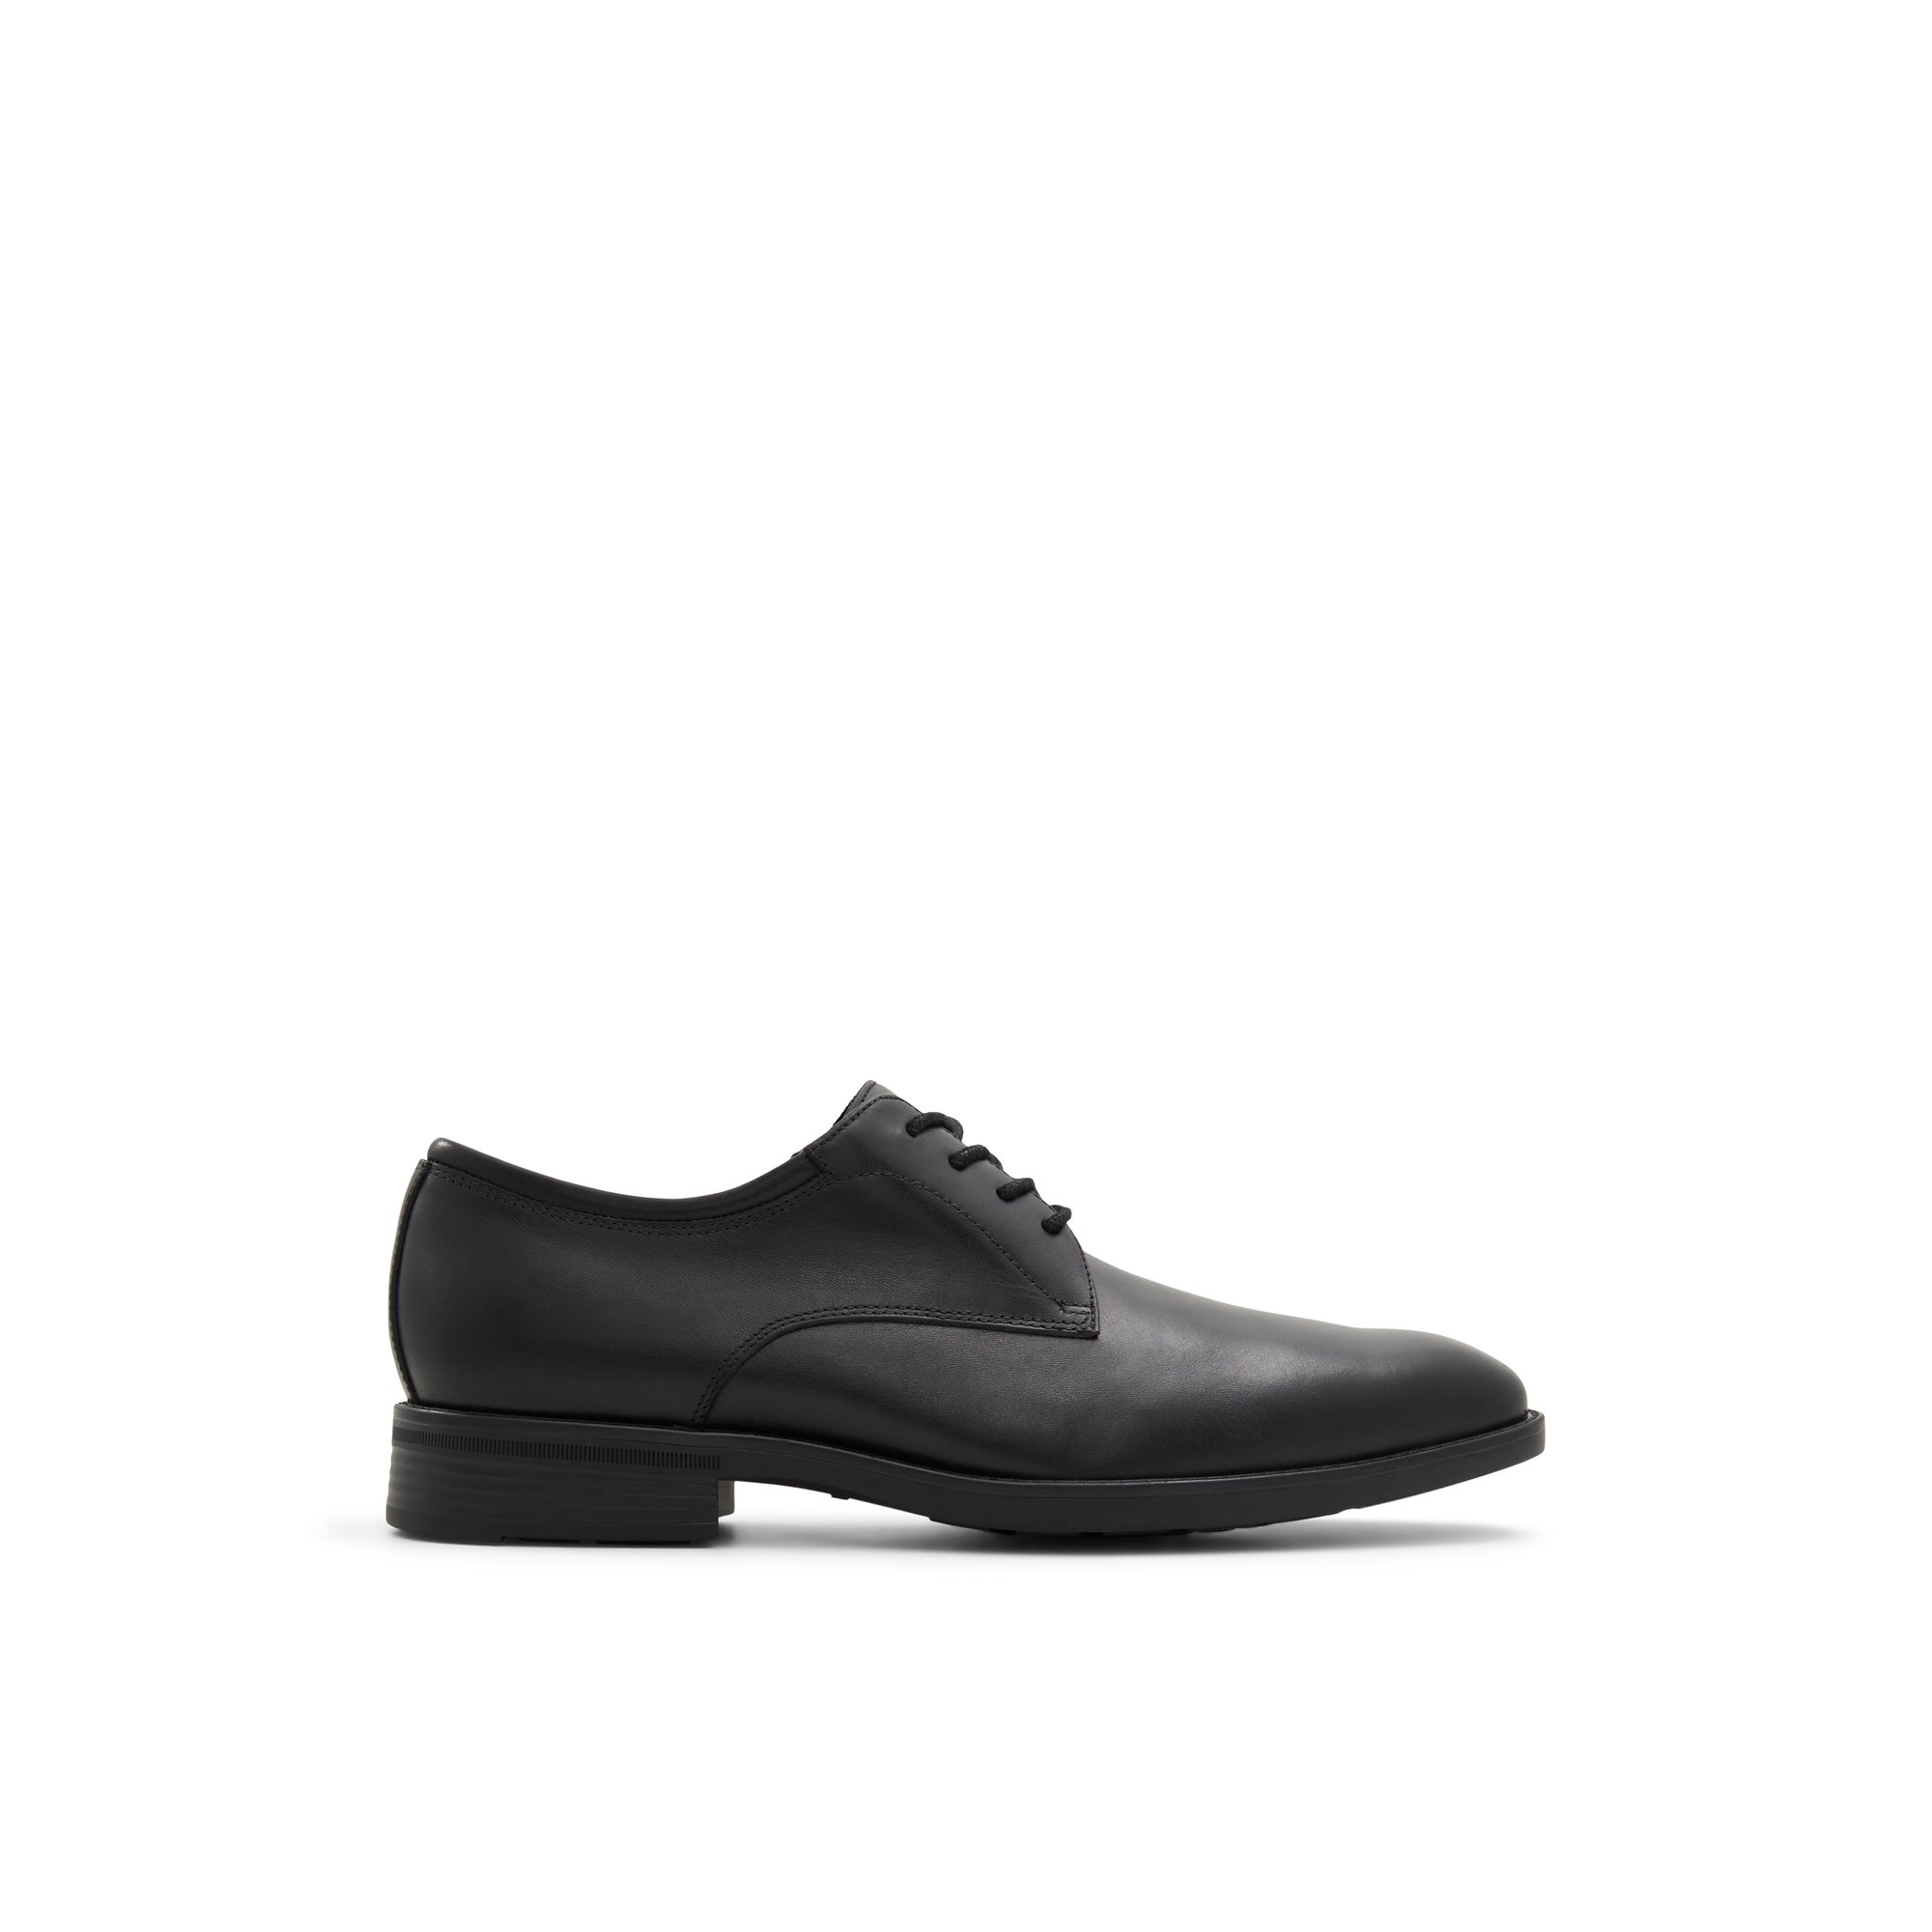 ALDO Keagan - Men's Dress Shoes - Black